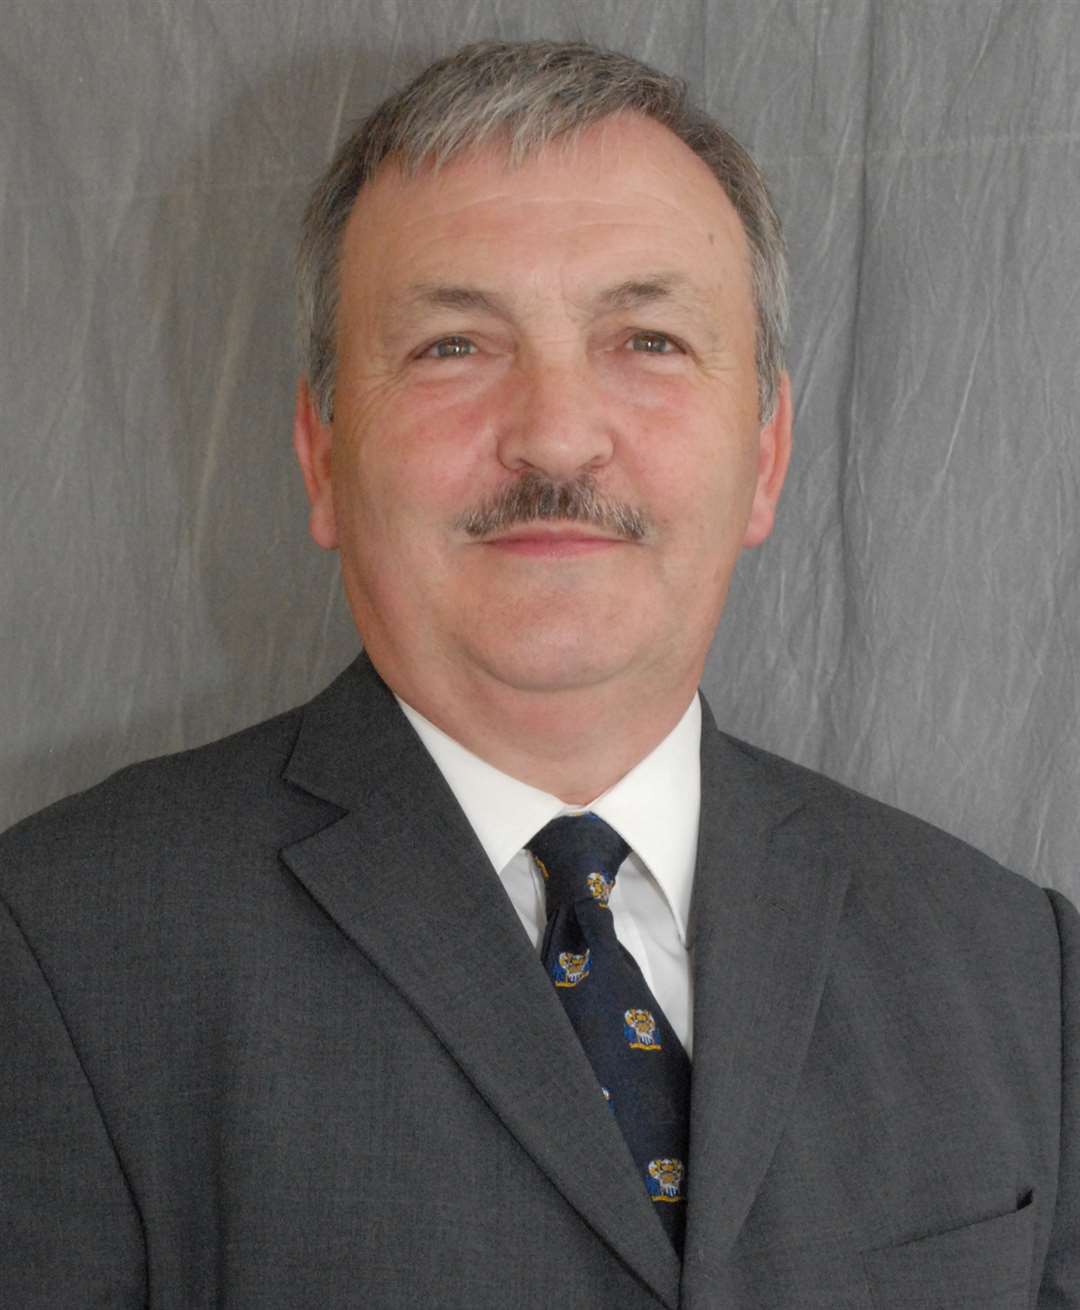 Cllr Alan Jarrett, leader of Medway Council